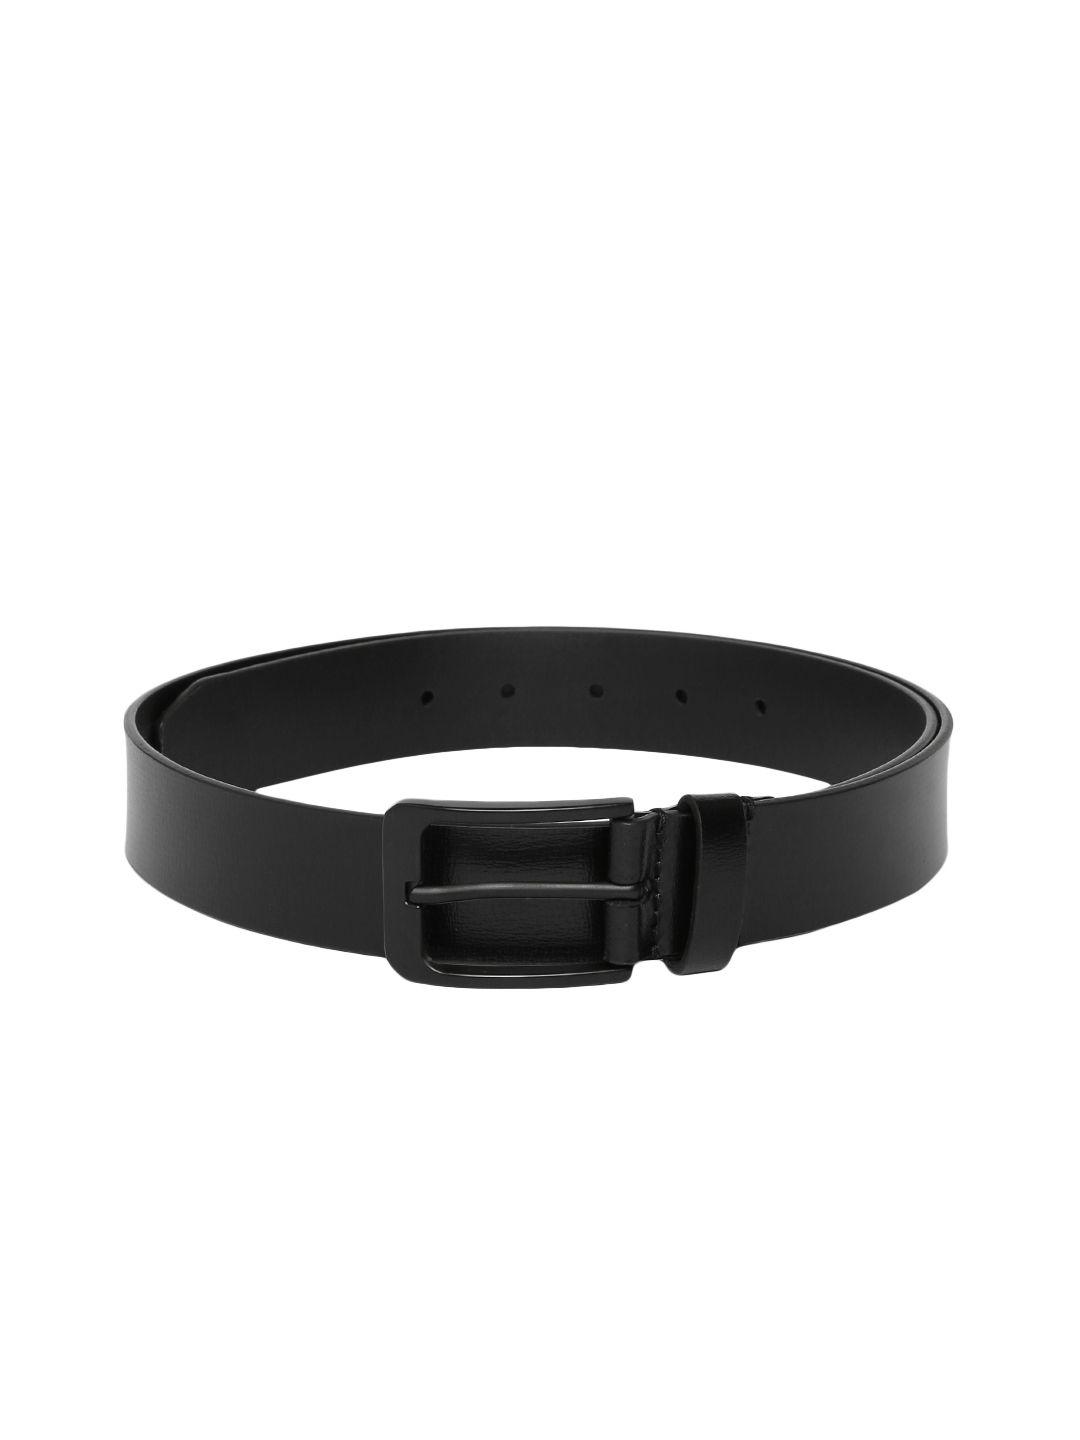 louis philippe men black solid leather belt